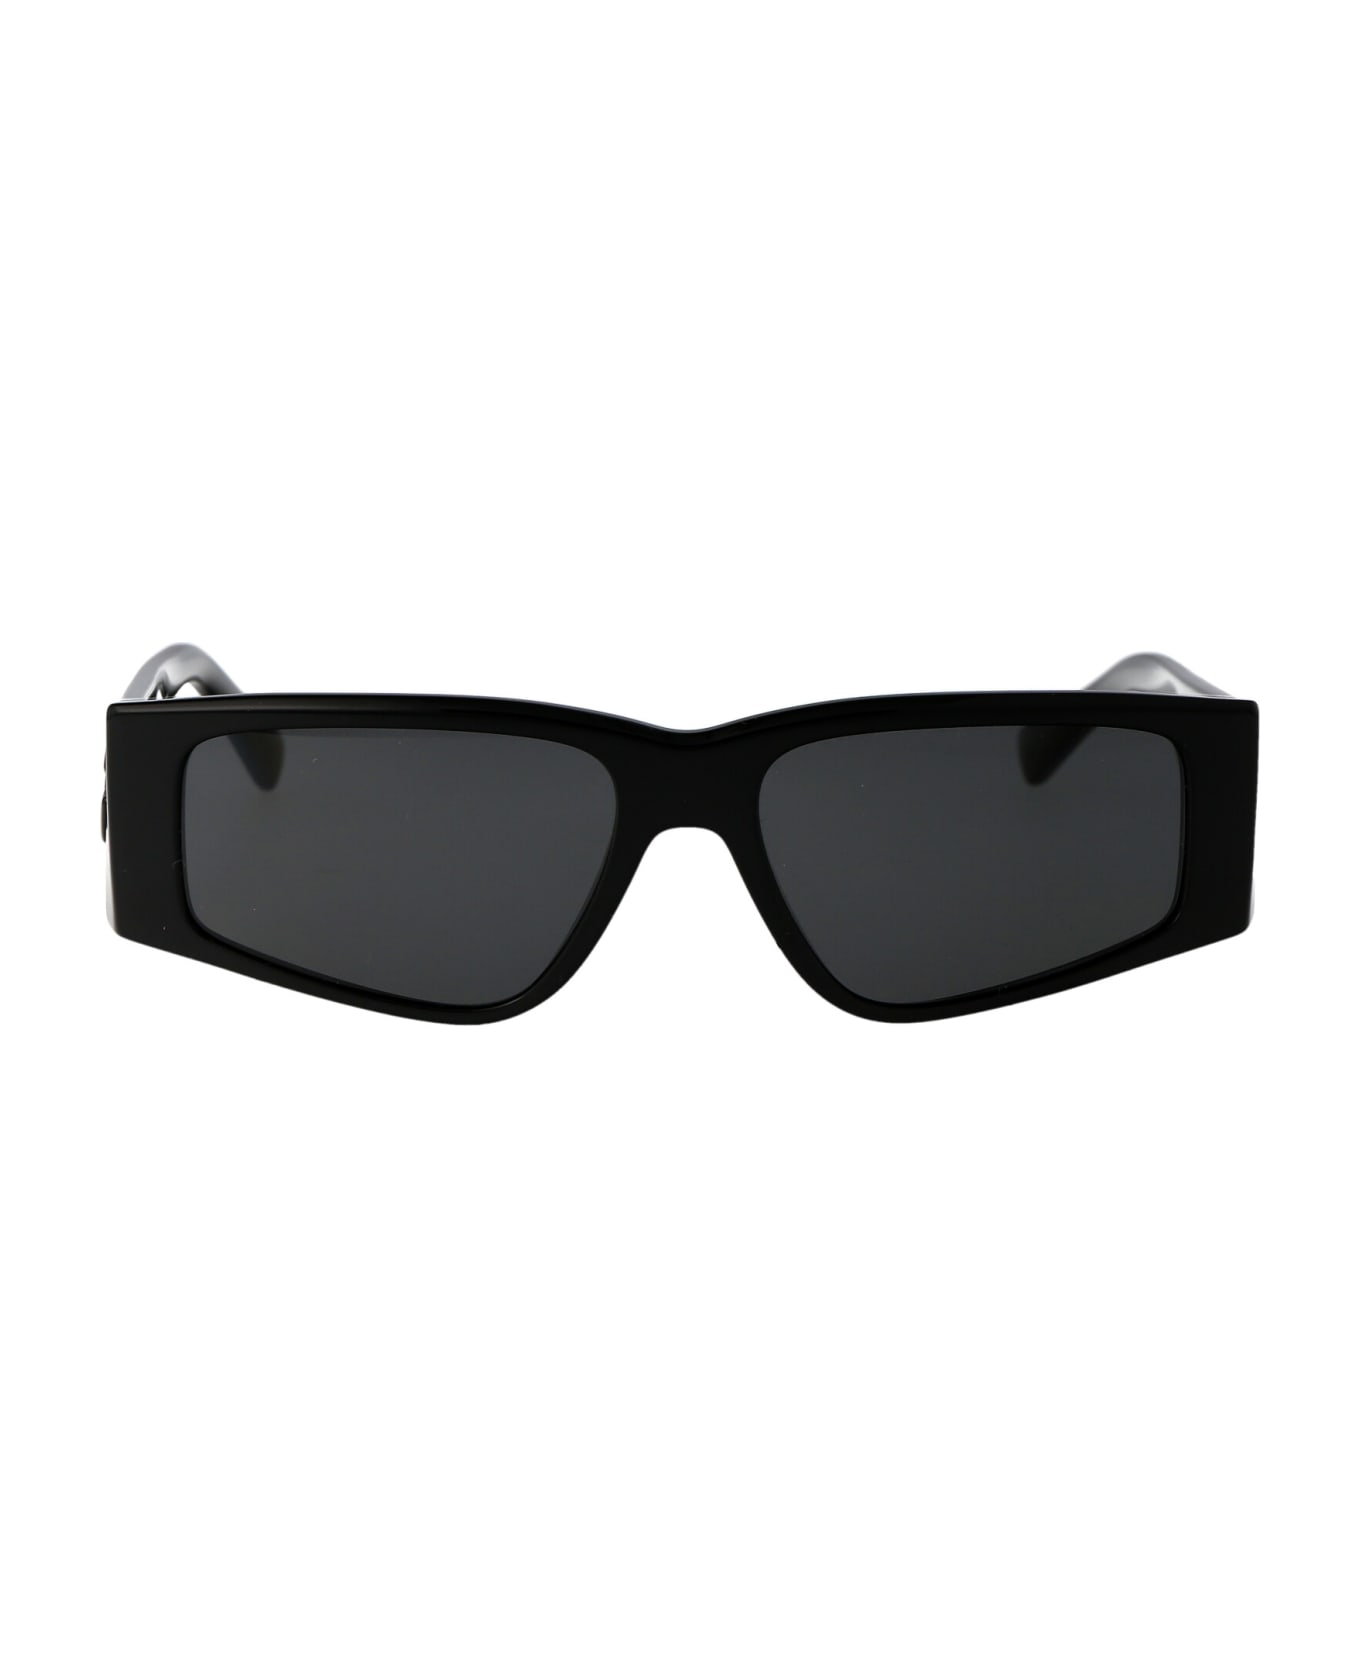 Dolce & Gabbana Eyewear 0dg4453 Sunglasses - 501/87 BLACK サングラス